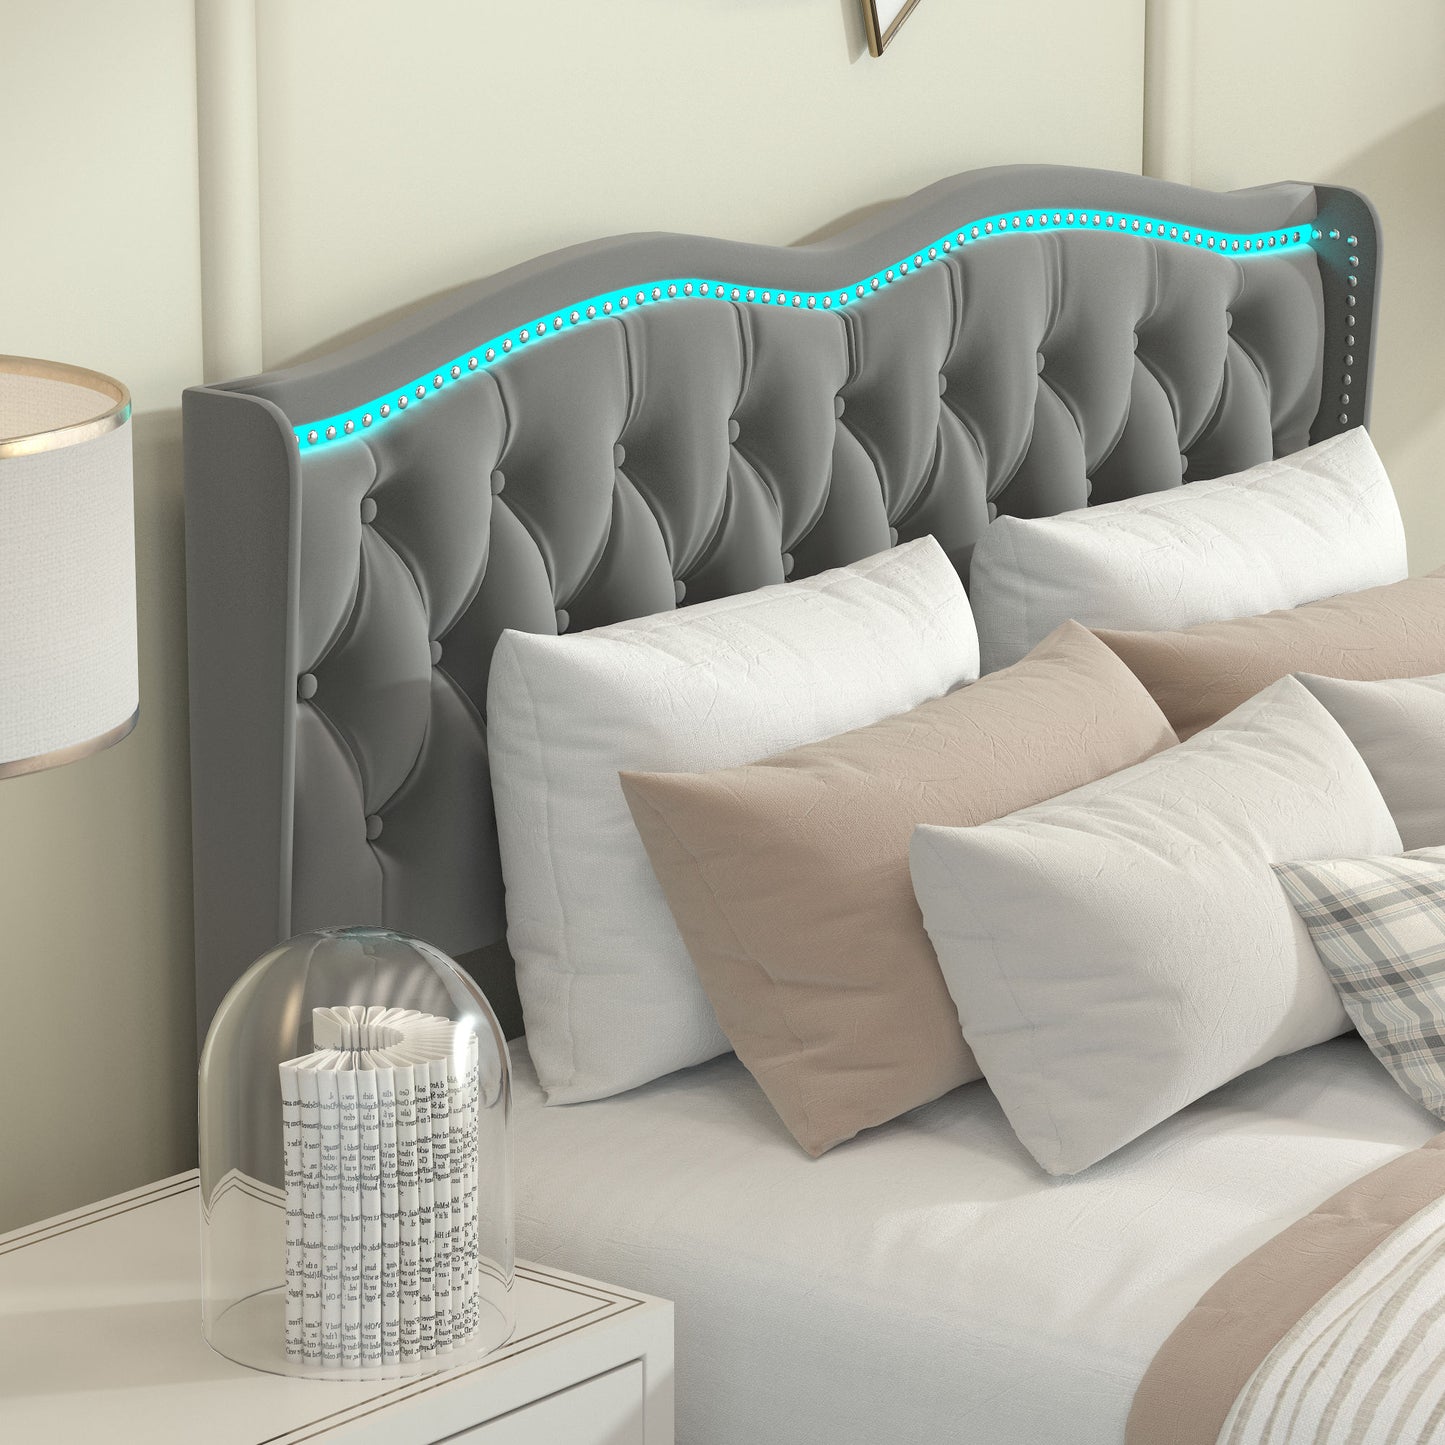 velvet upholstered bed with adjustable colorful led light decorative headboard & storage 4 drawers, grey